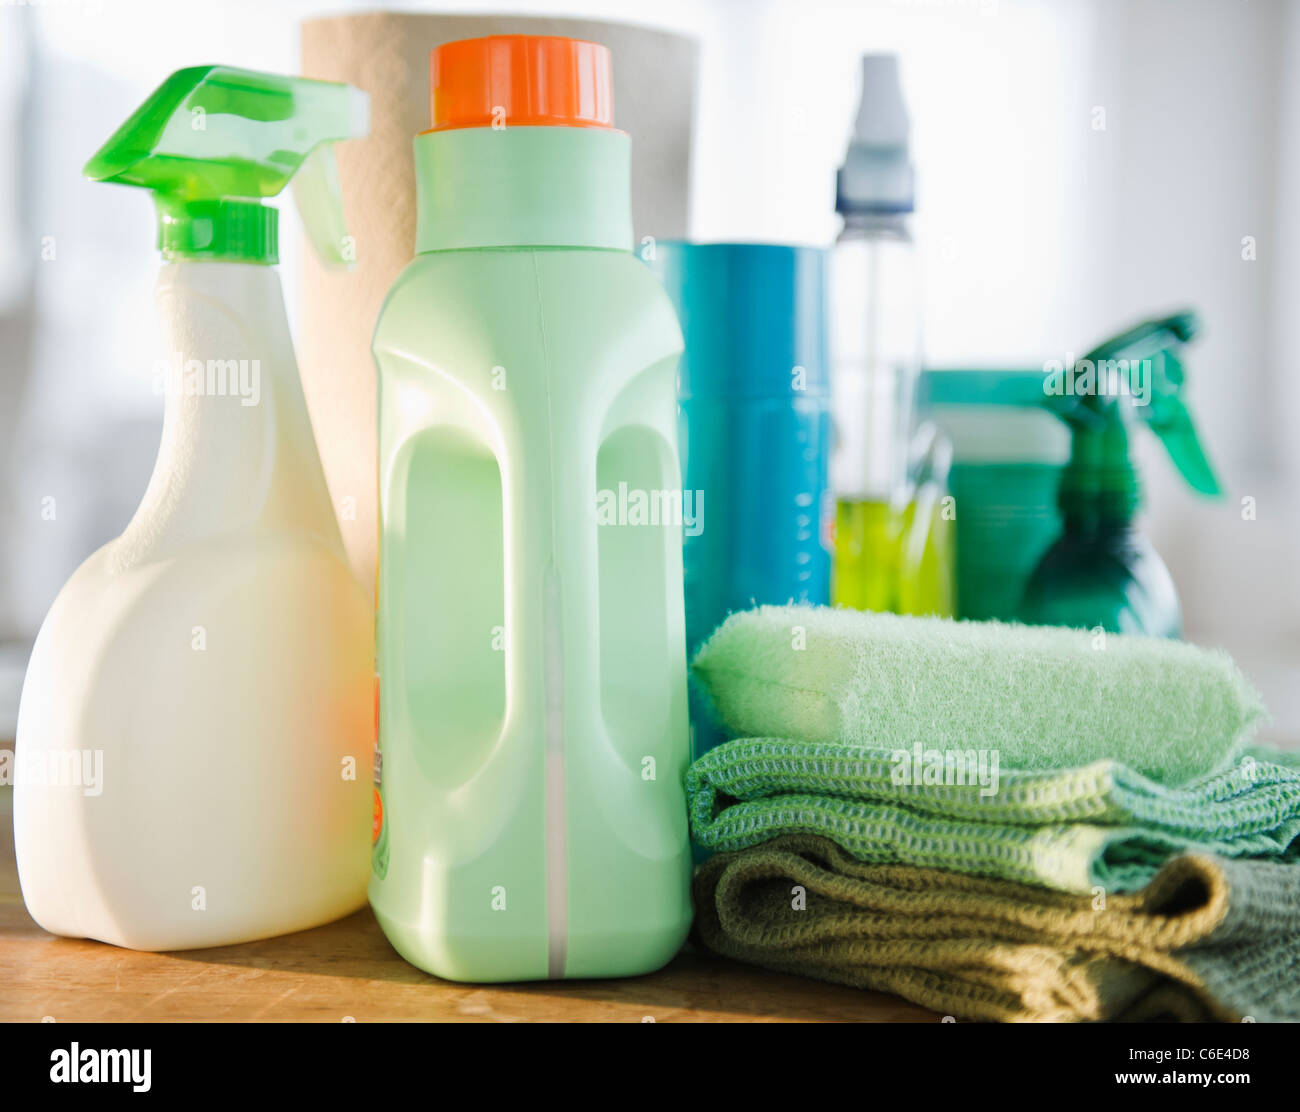 Stati Uniti d'America, New Jersey, Jersey City, Close up di detergenti e apparecchiature per la pulizia Foto Stock